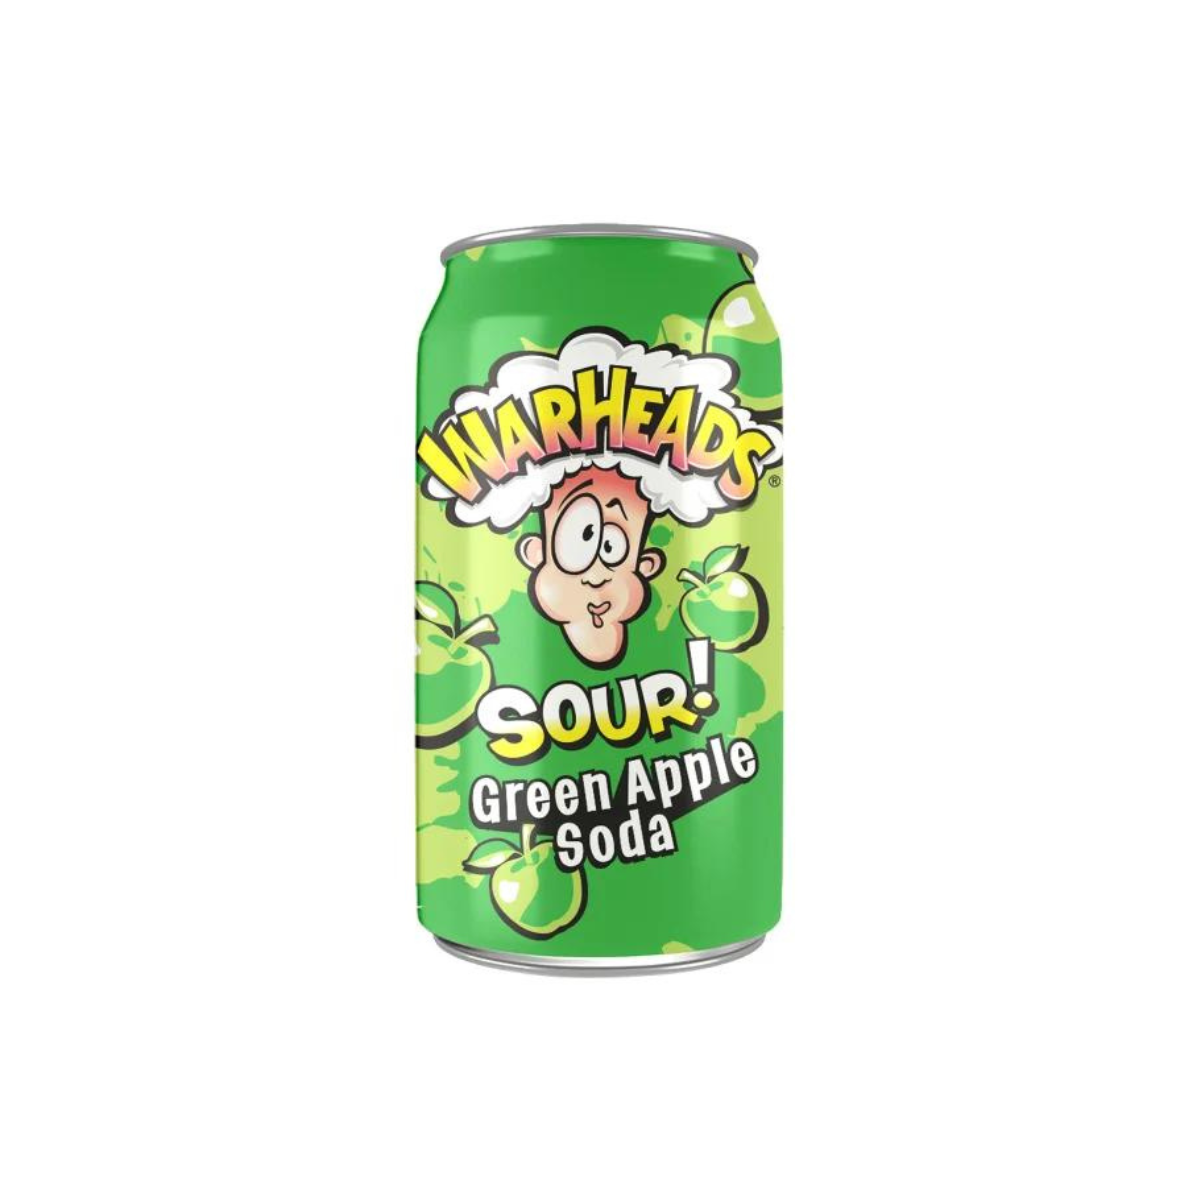 Warheads Sour Green Apple Soda 355m